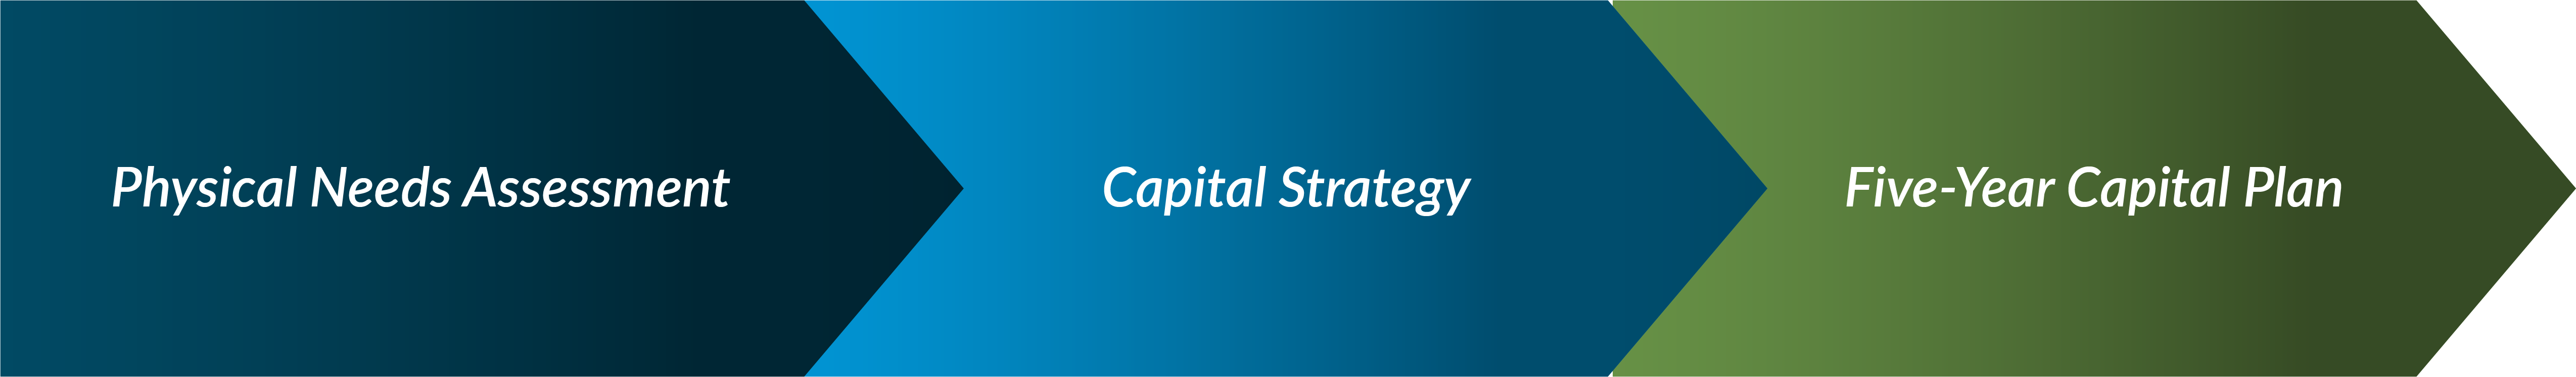 Capital Planning Process